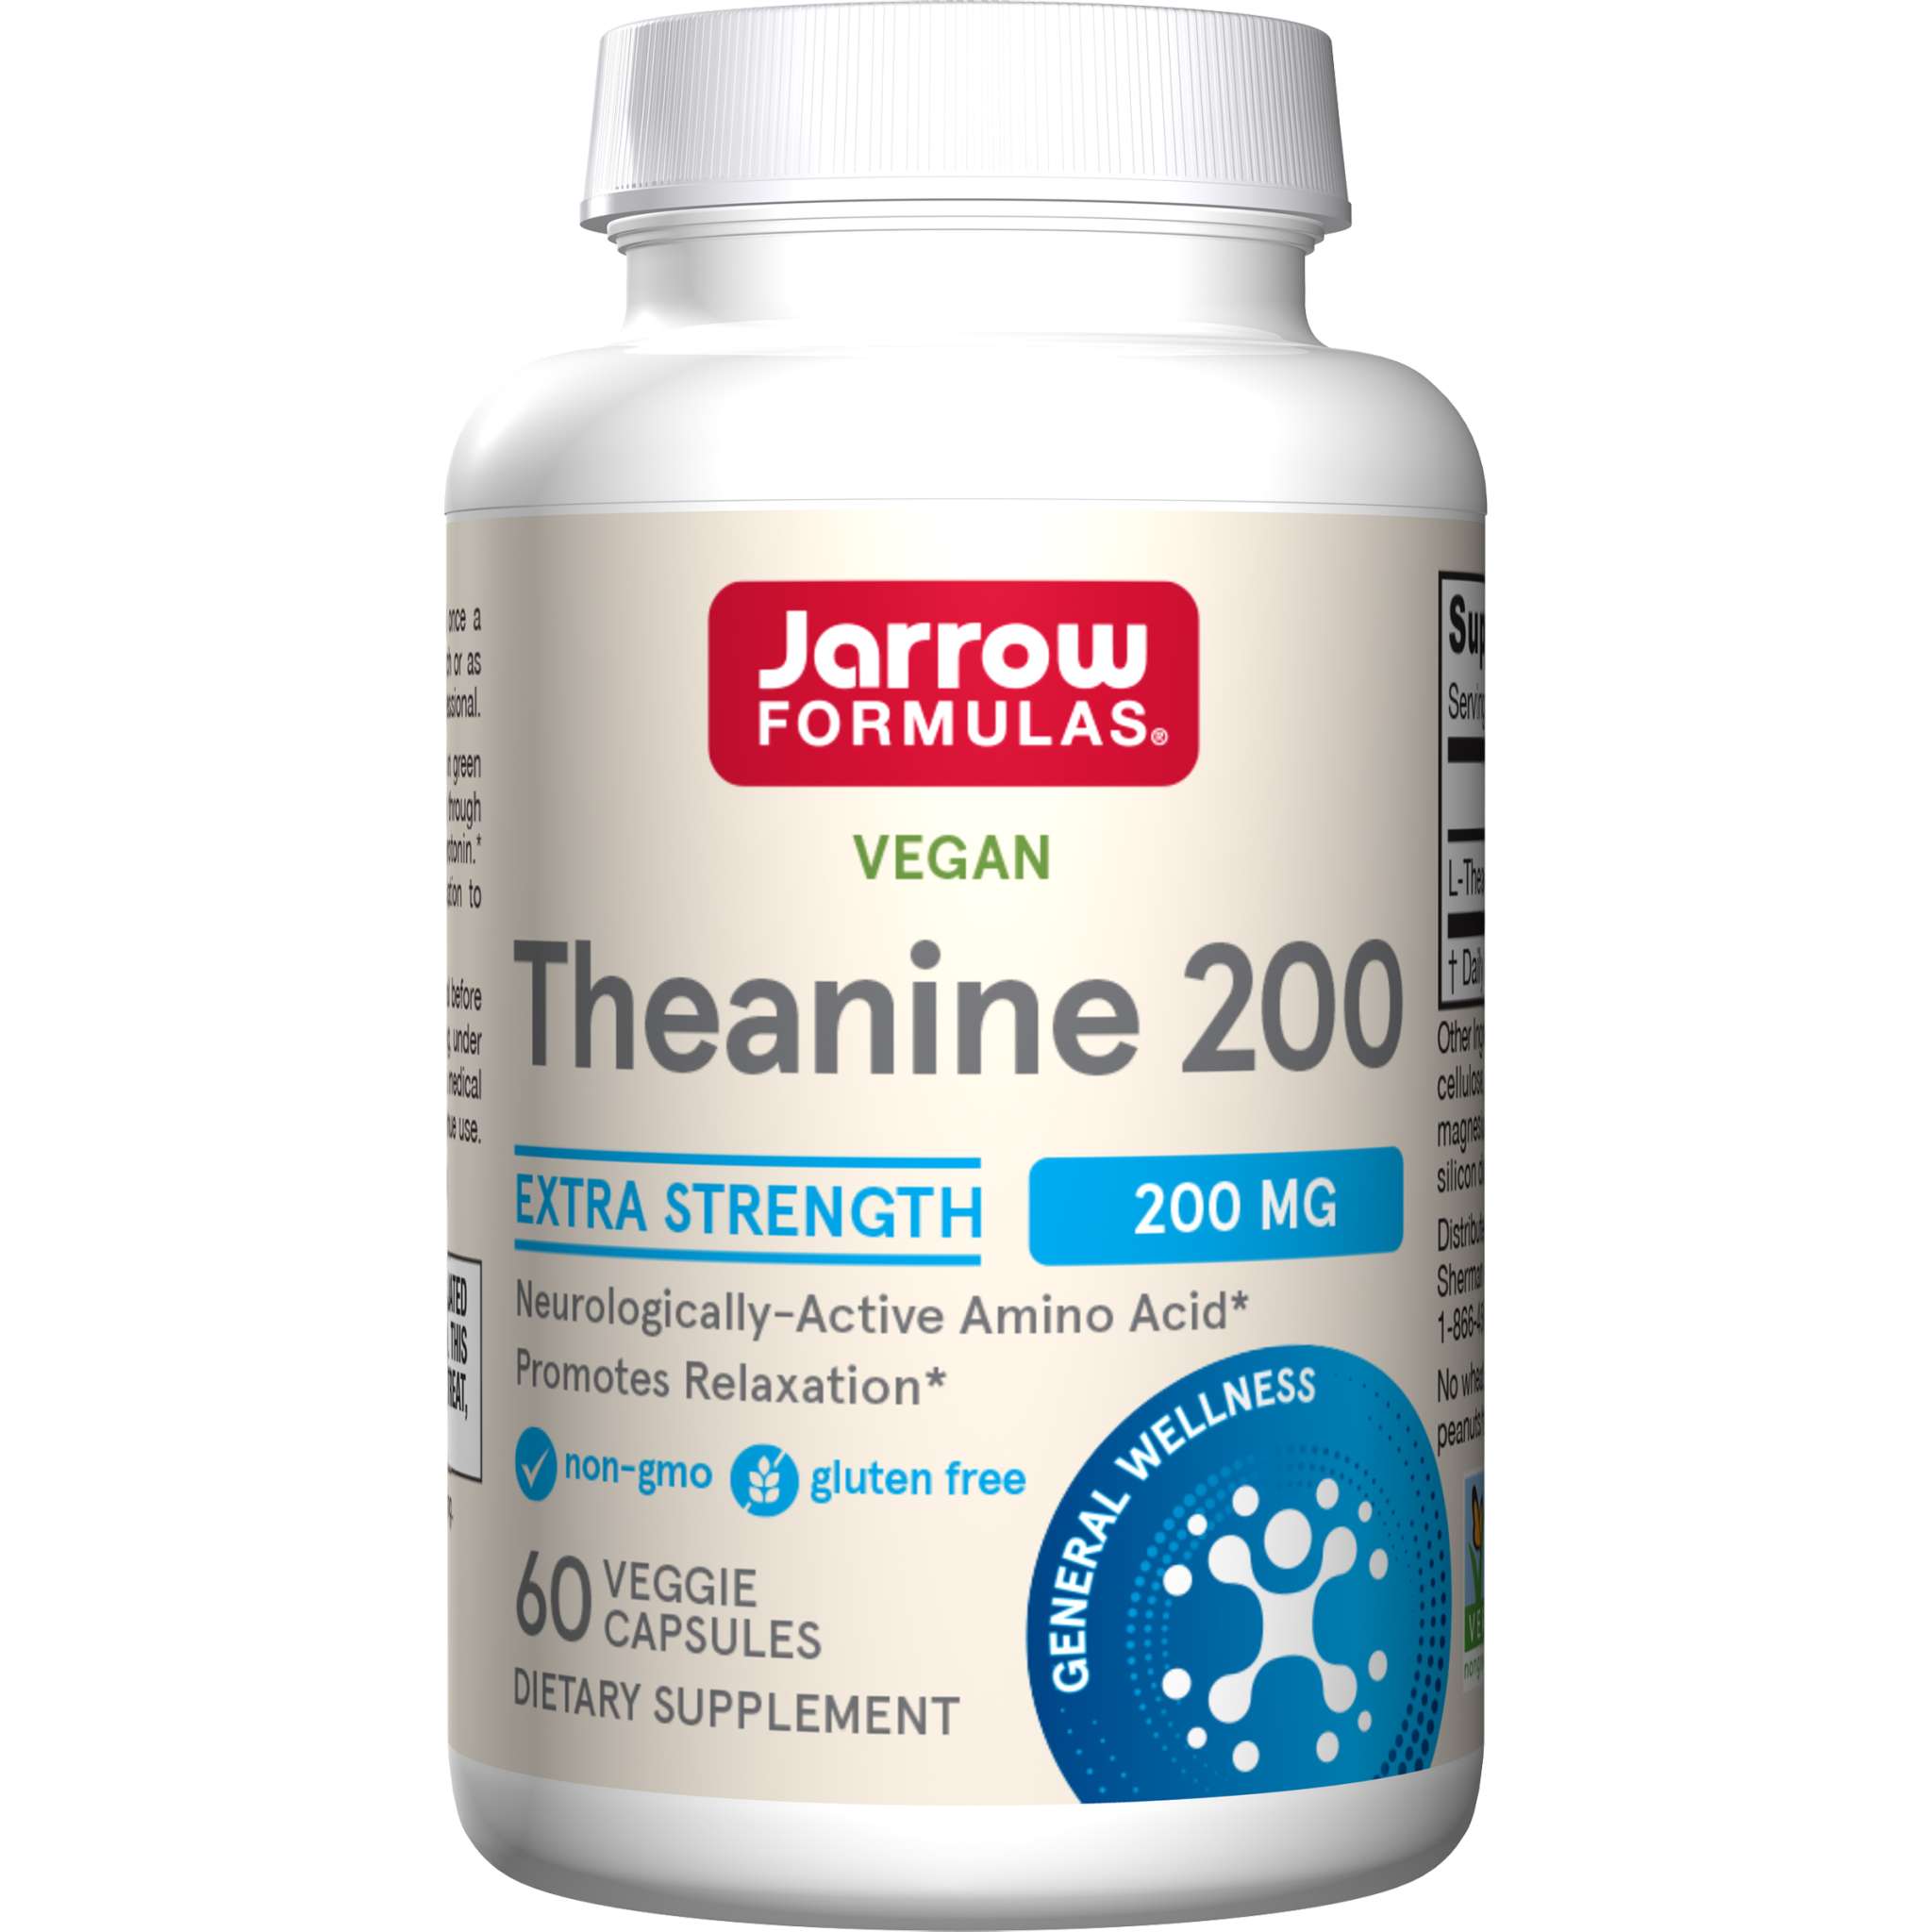 Jarrow Formulas - Theanine 200 mg